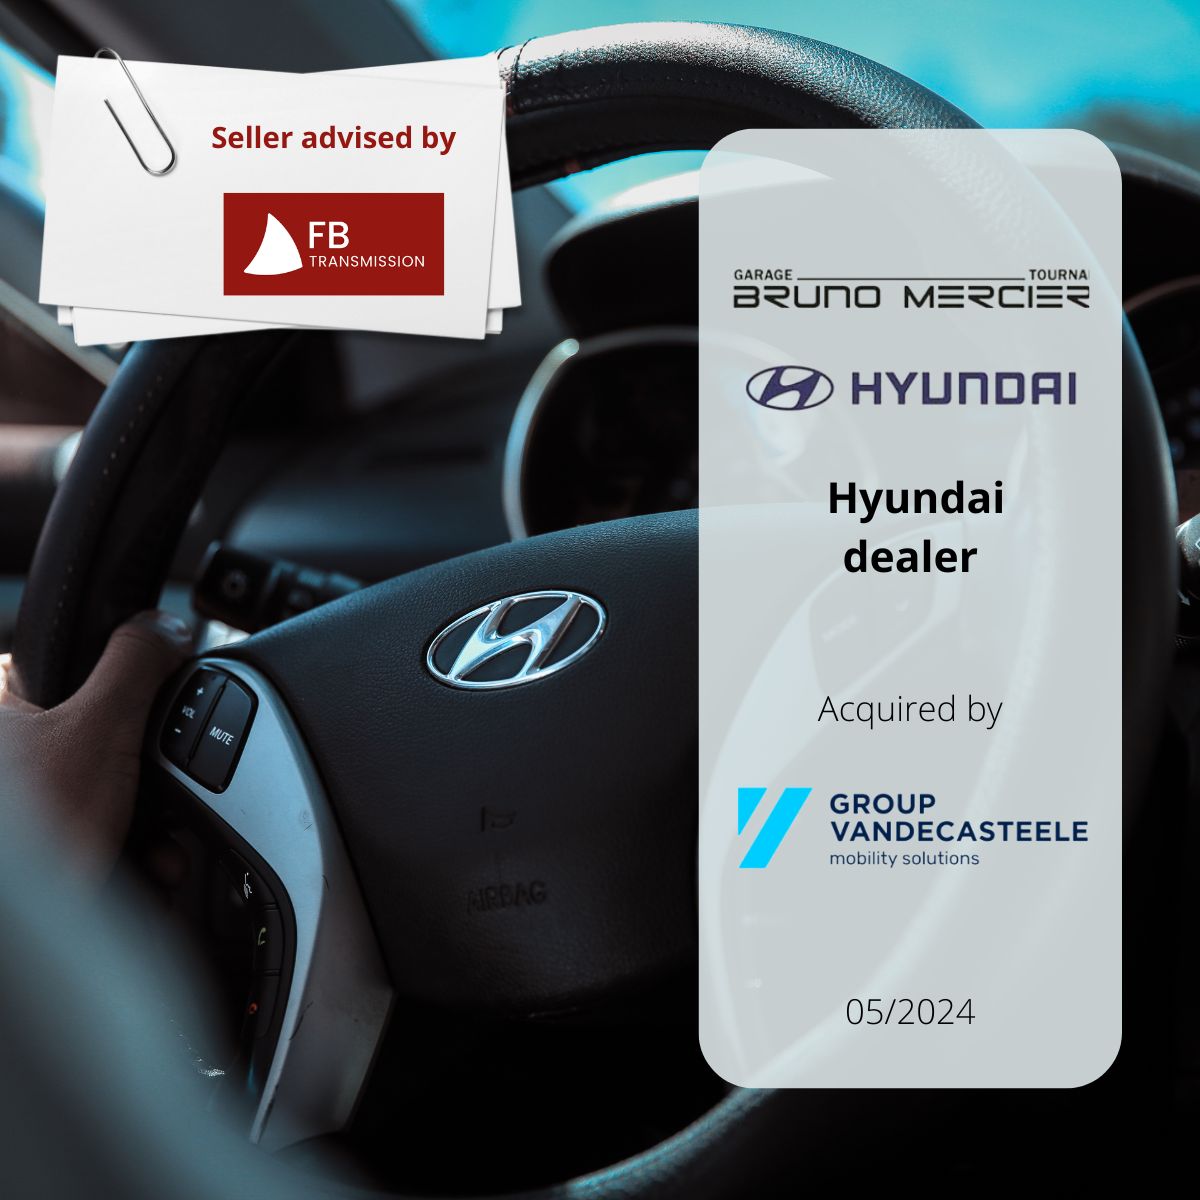 Done deal – Garage Bruno Mercier – Hyundai dealer